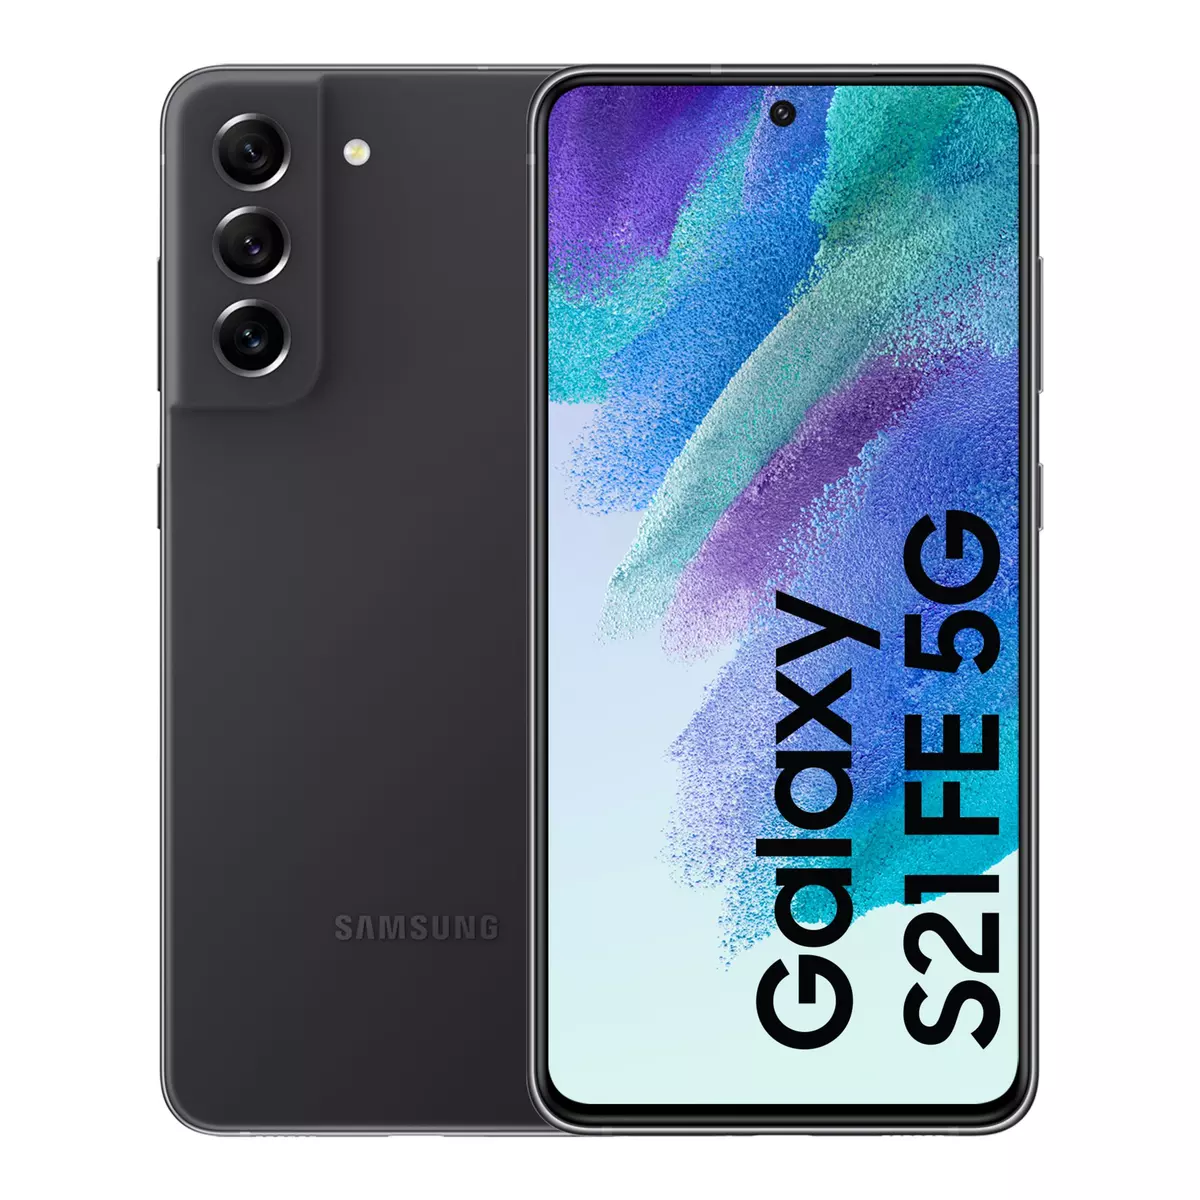 SAMSUNG Galaxy S21 FE 5G 128GO - Noir pas cher 